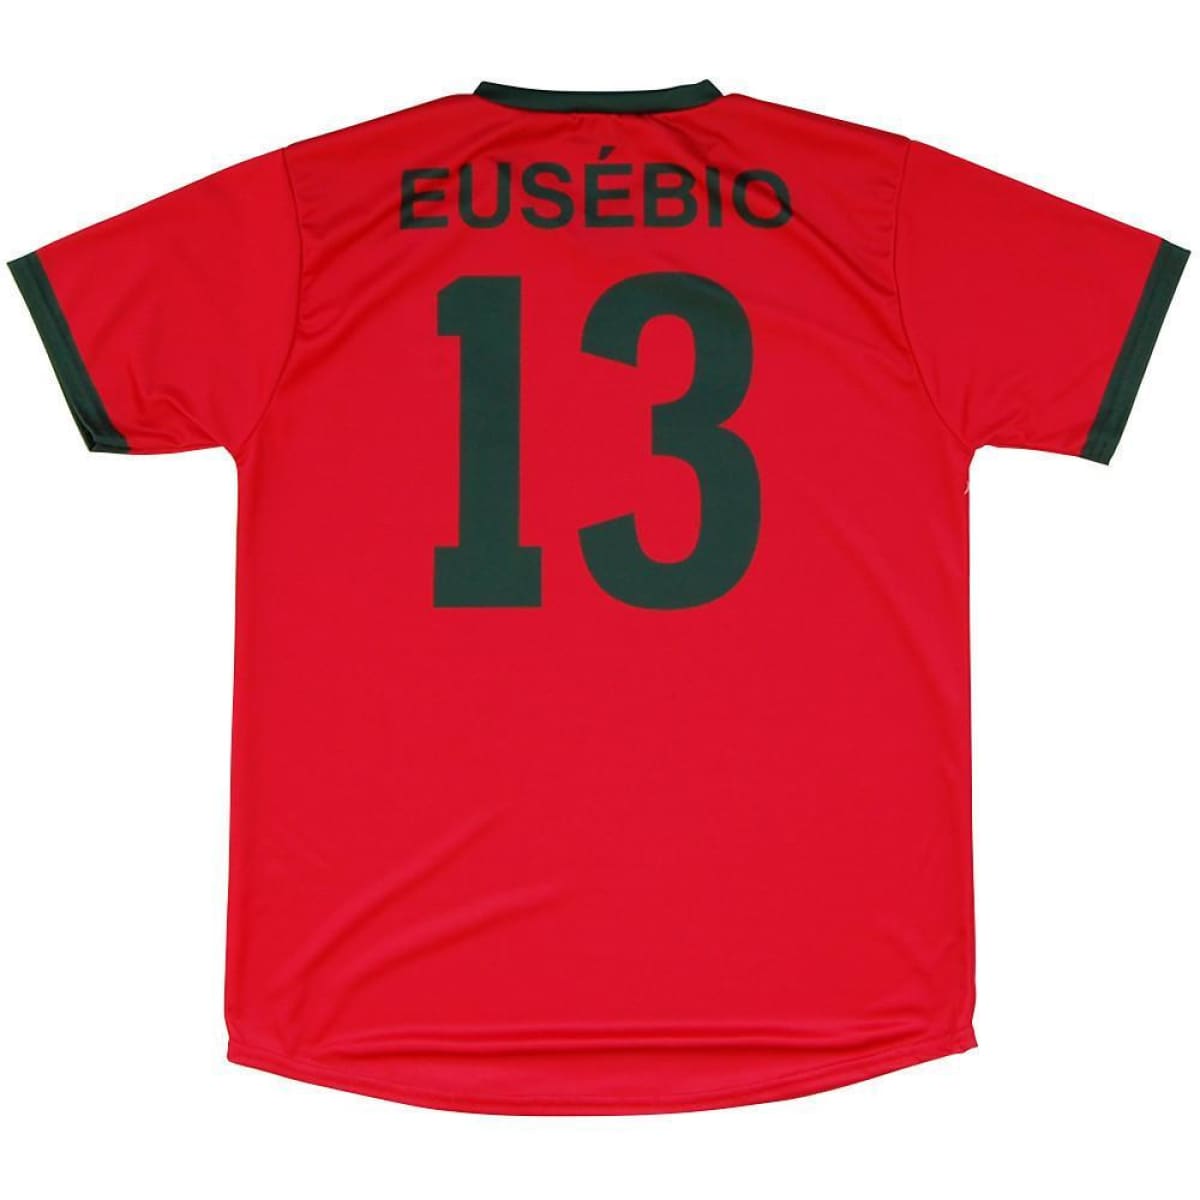 eusebio jersey number